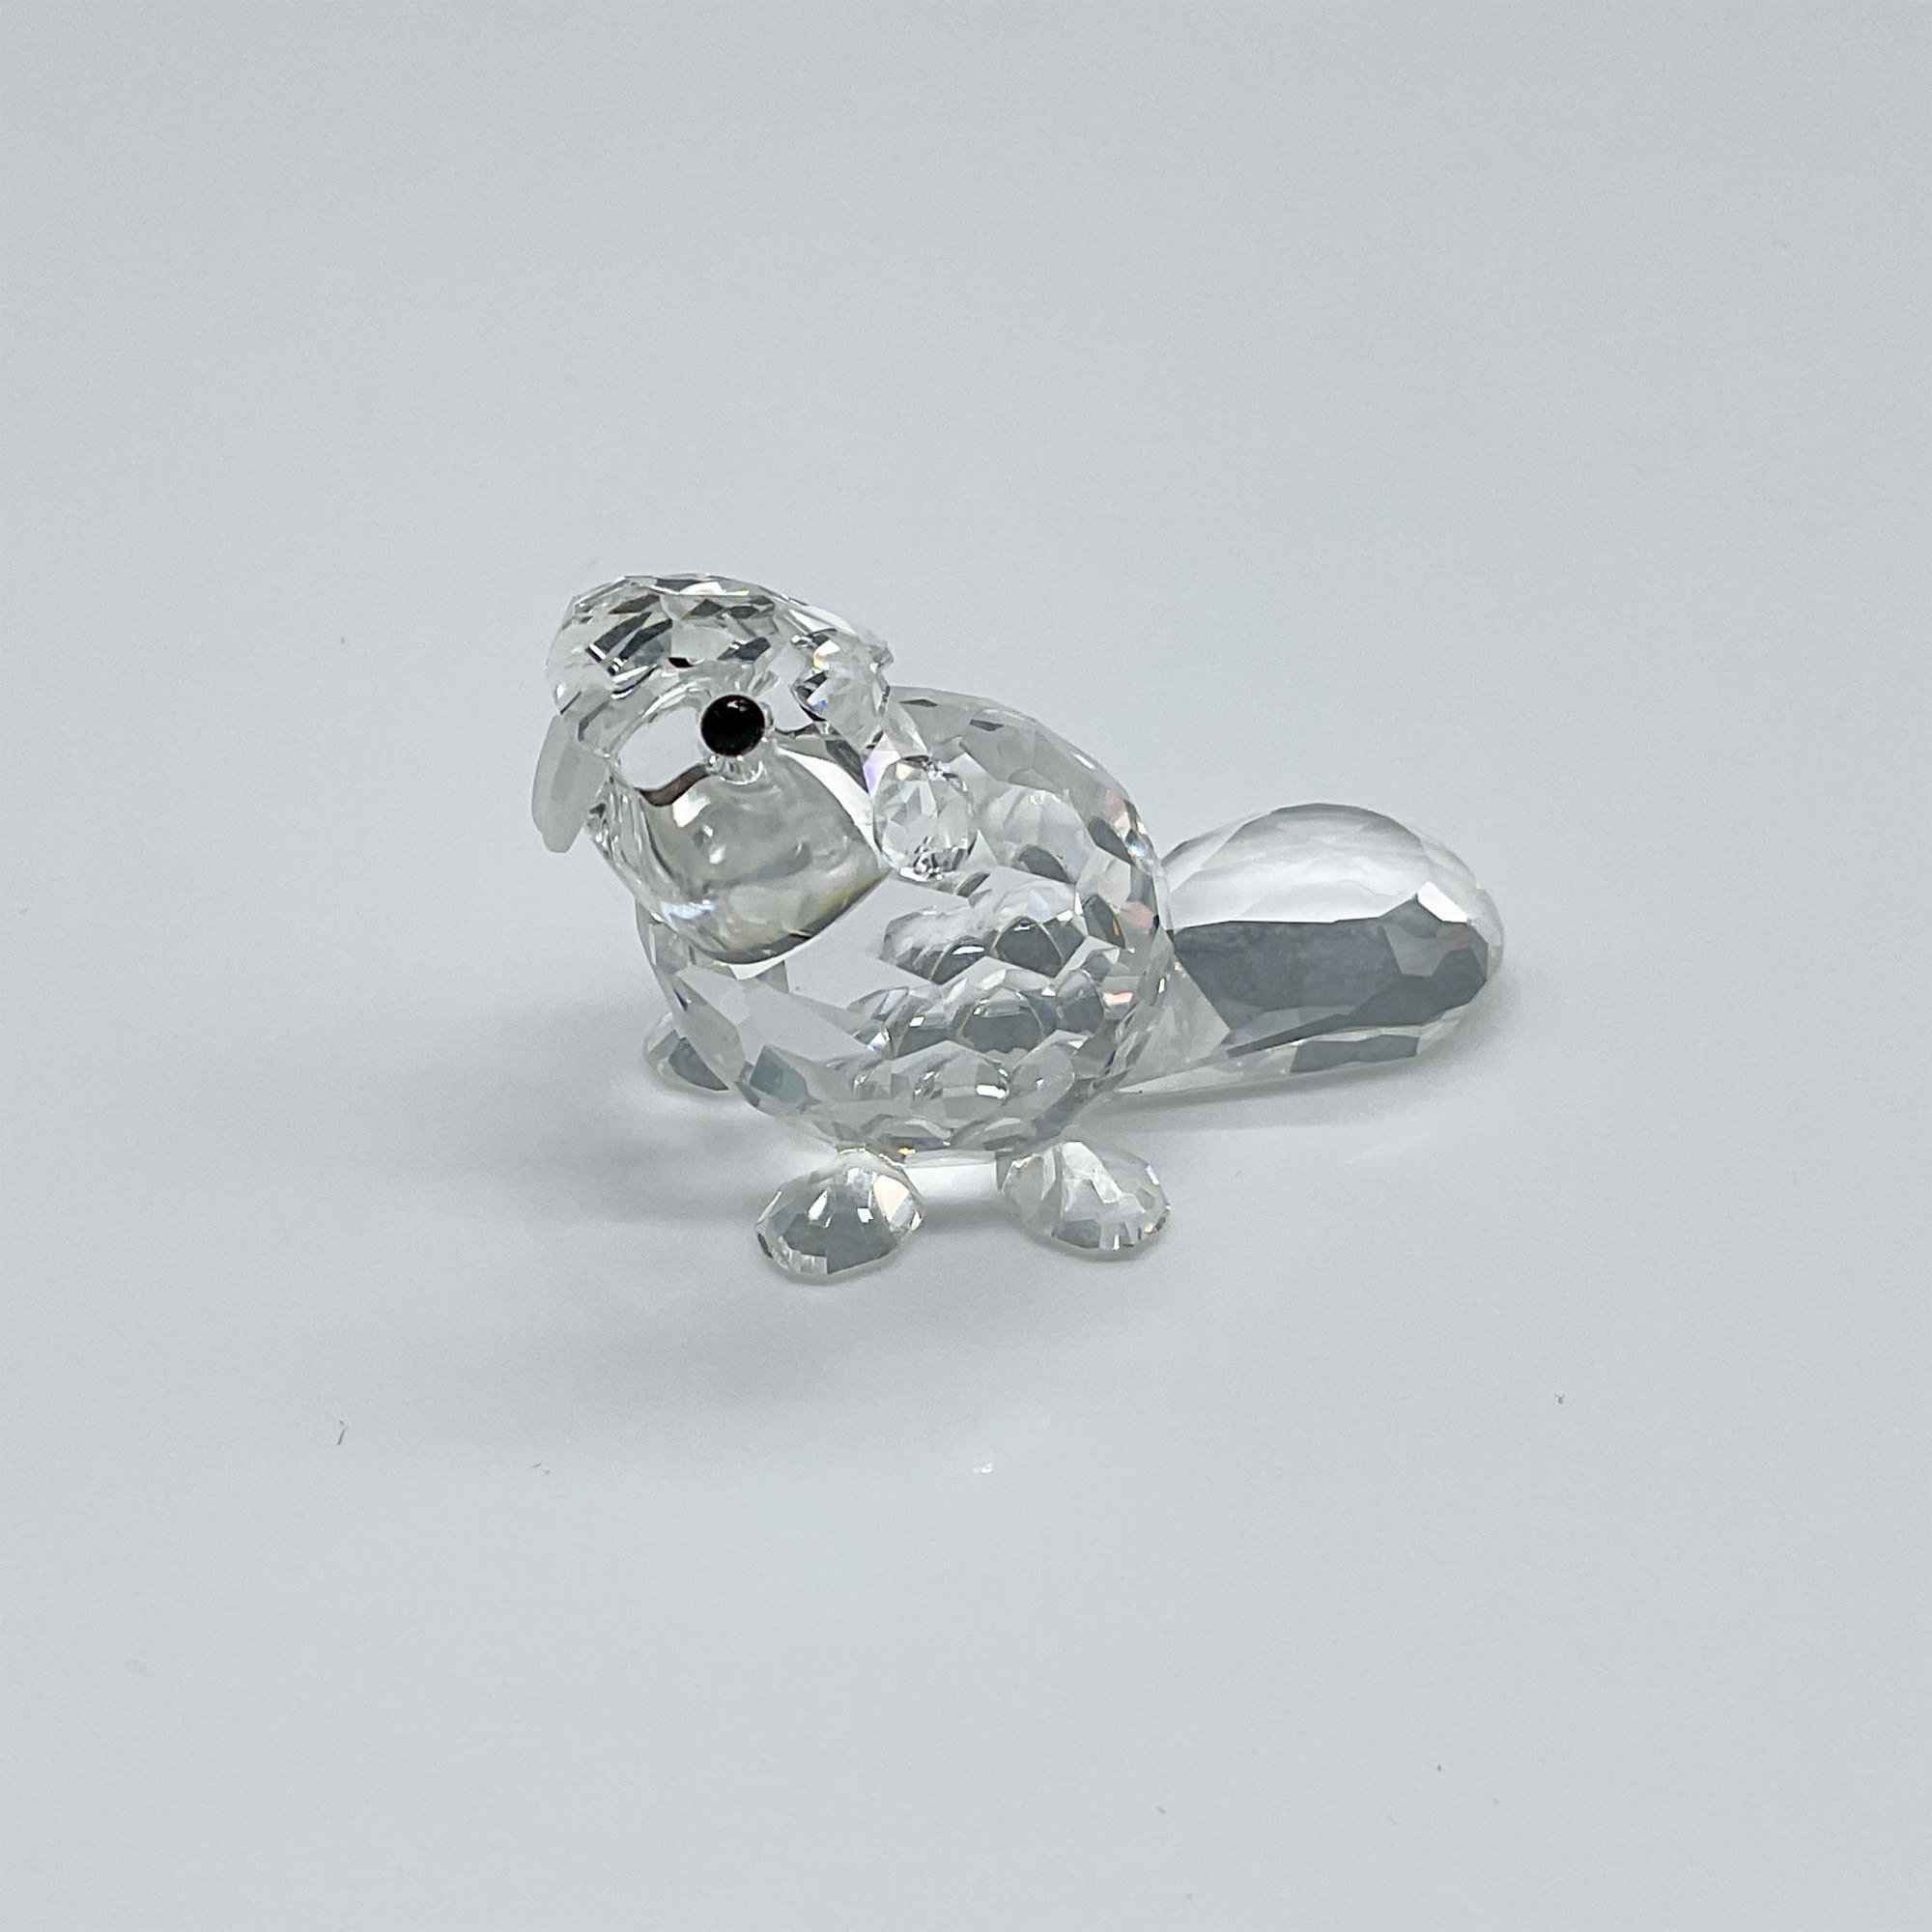 Swarovski Silver Crystal Figurine, Seated Baby Beaver - Image 2 of 4